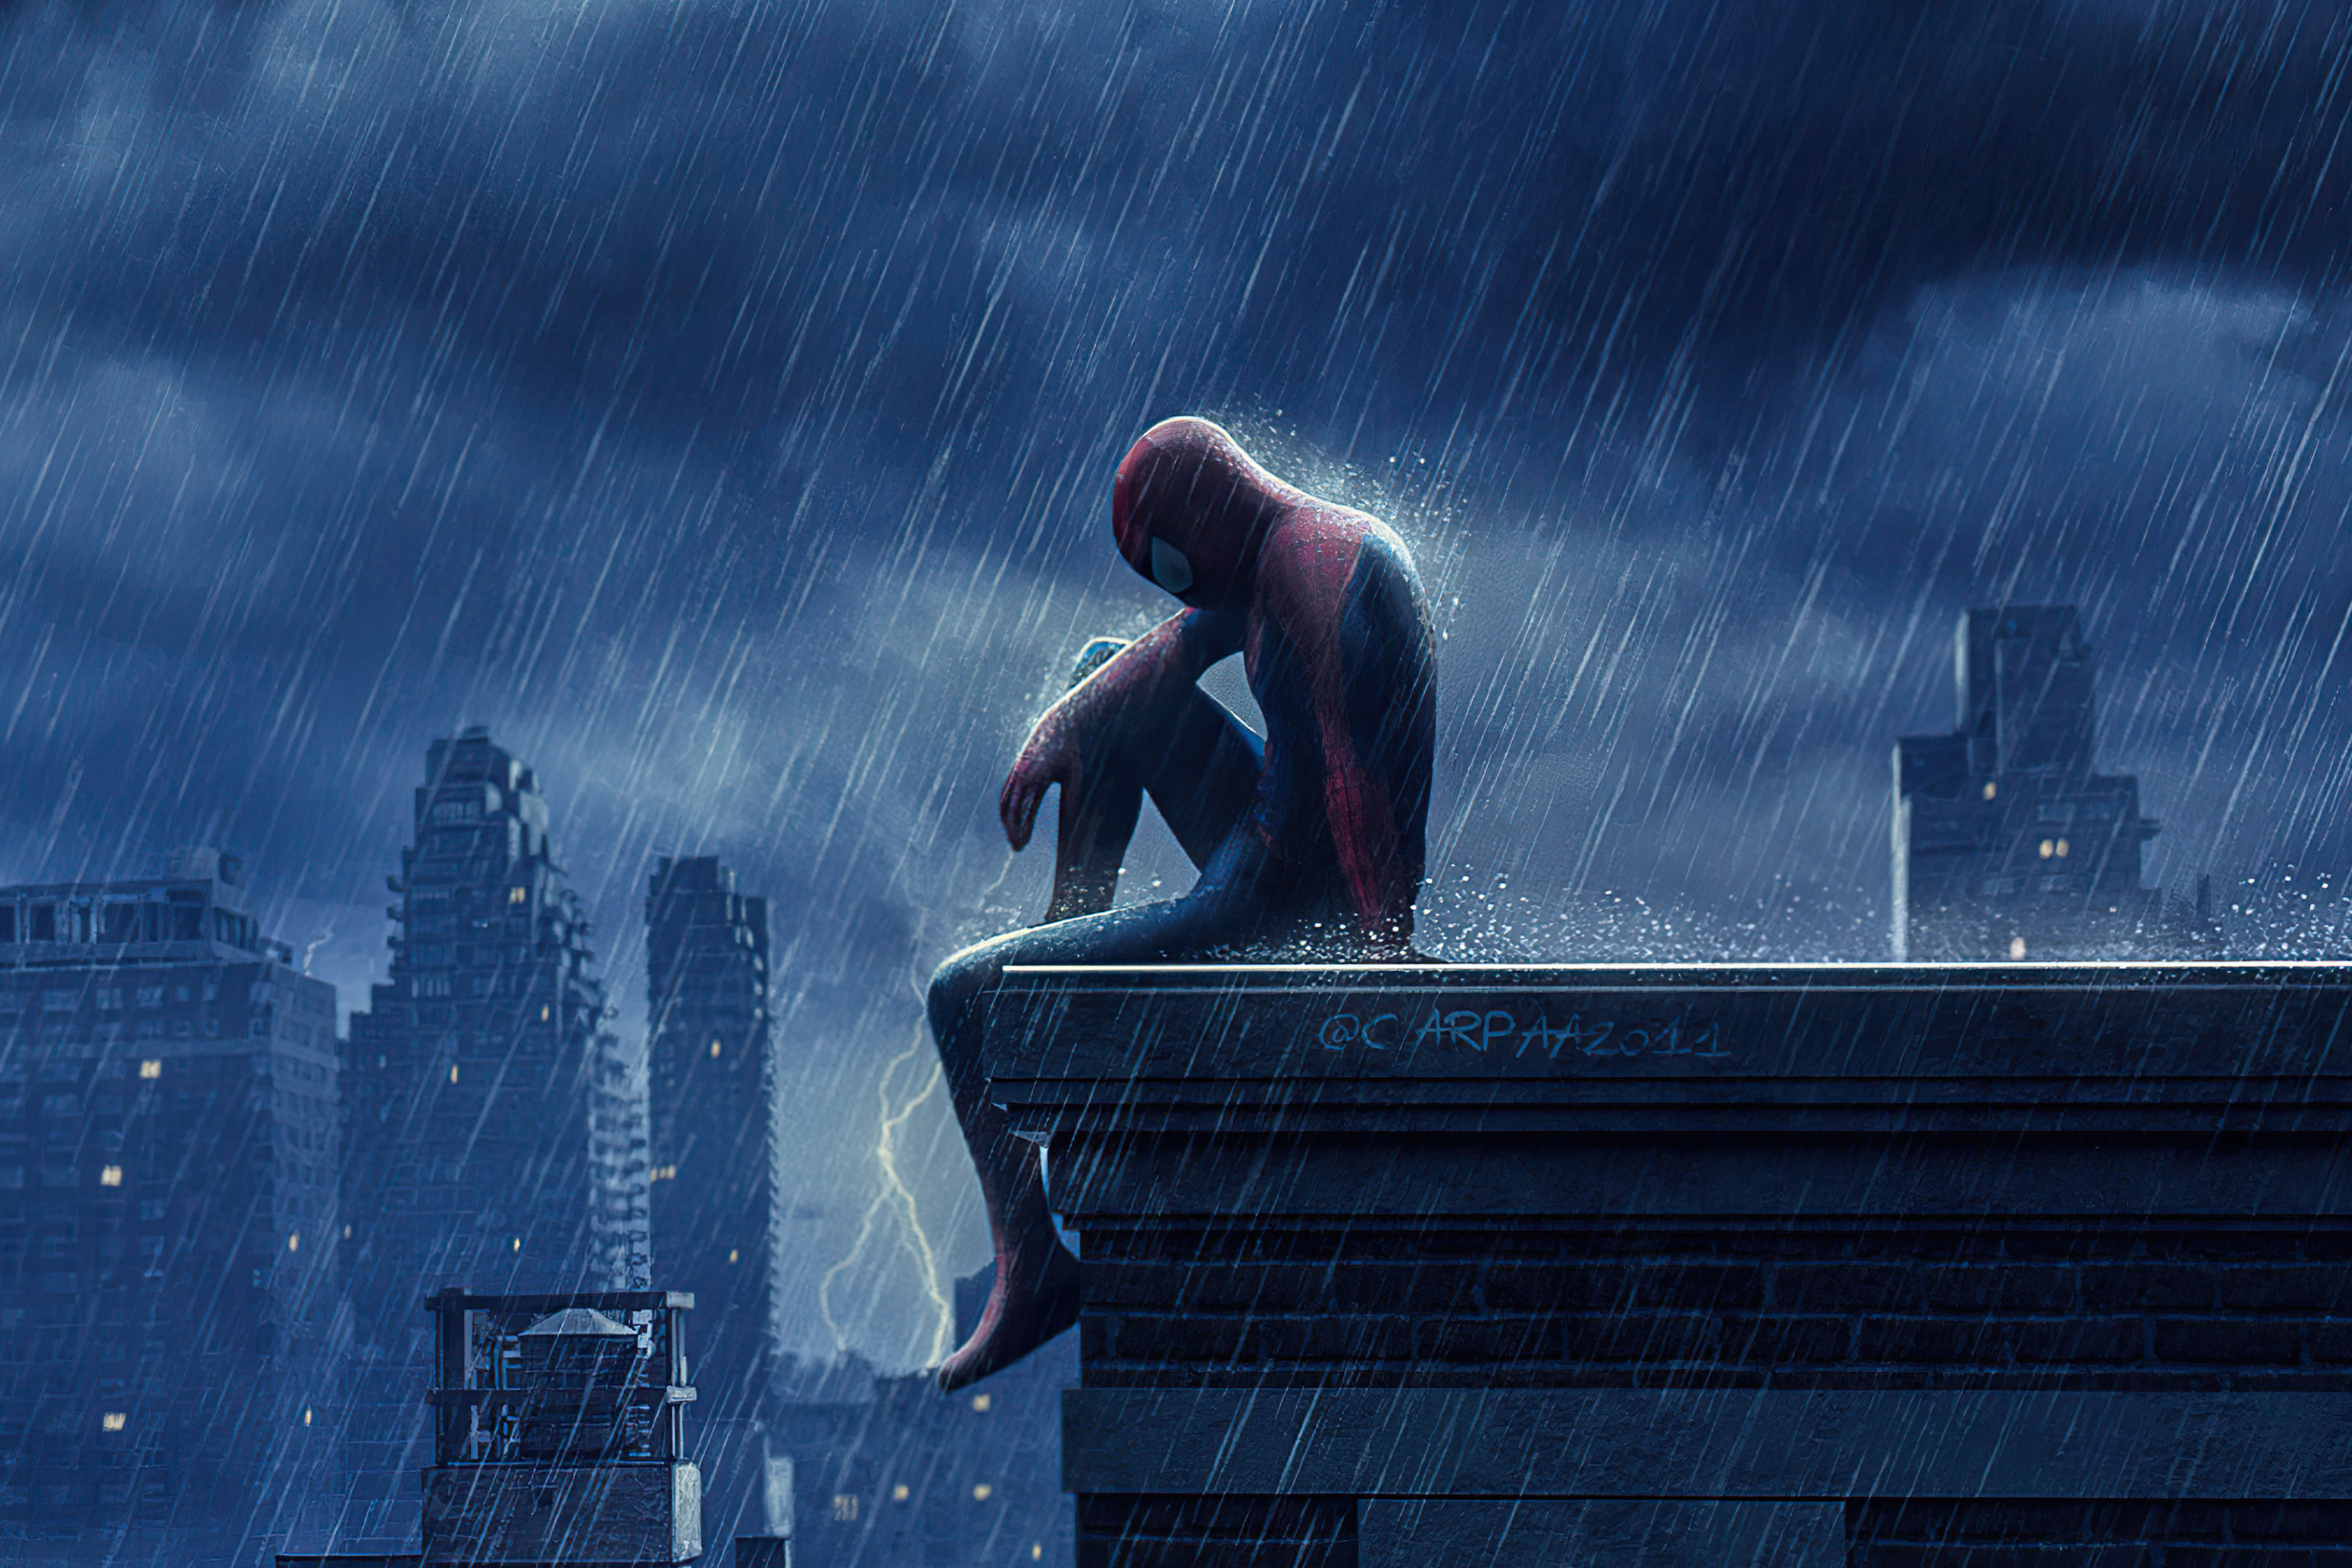 Sophie rain spiderman video 18. Человек паук сидит на крыше. Человек паук 2048. Человек паук сидит. Человек паук сиди на крыше под дождём.